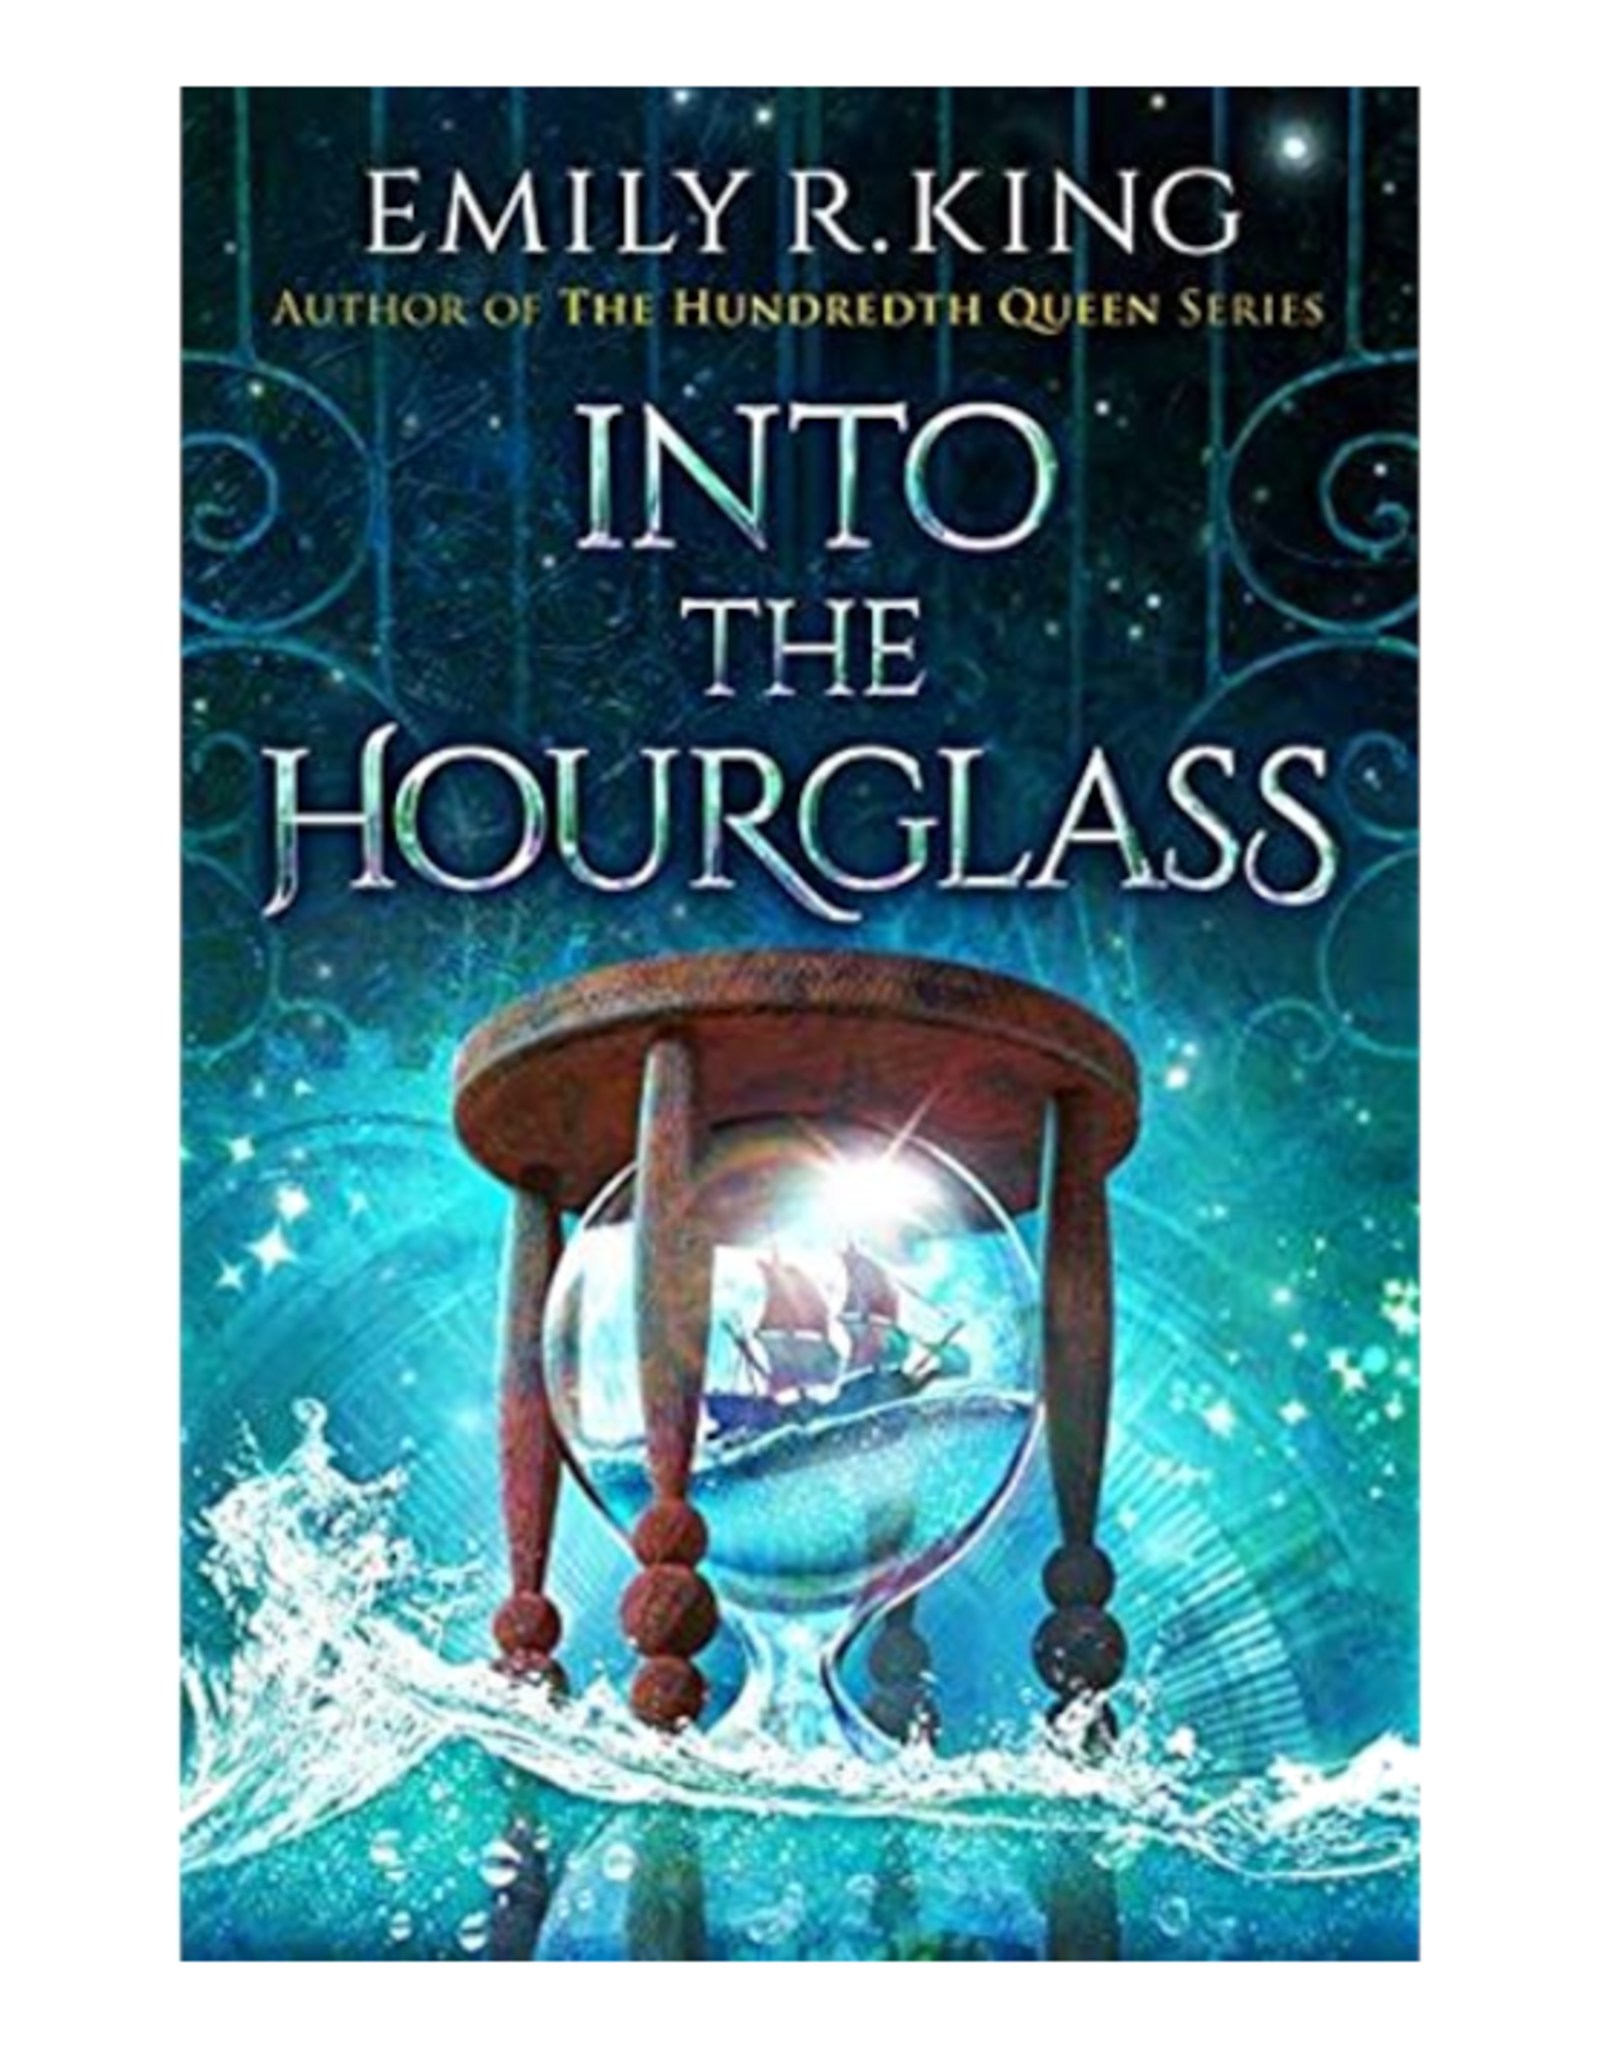 Thomas Allen Books Book - Into the Hourglass